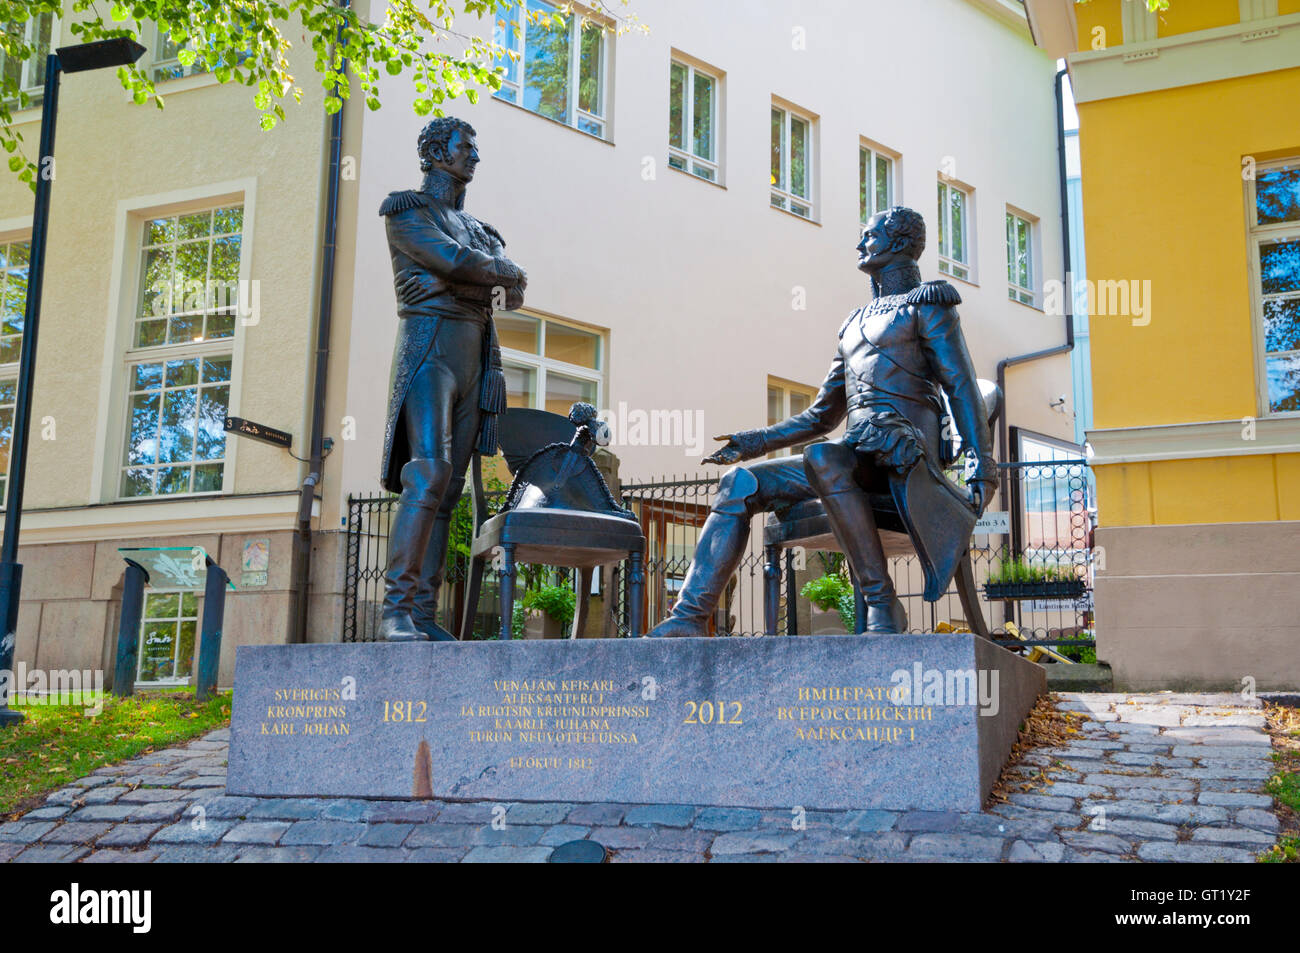 Crown prince of Sweden and Czer of Russian Empire meet in Turku in 1812, memorial sculpture, Aura riverside, Turku, Finland Stock Photo